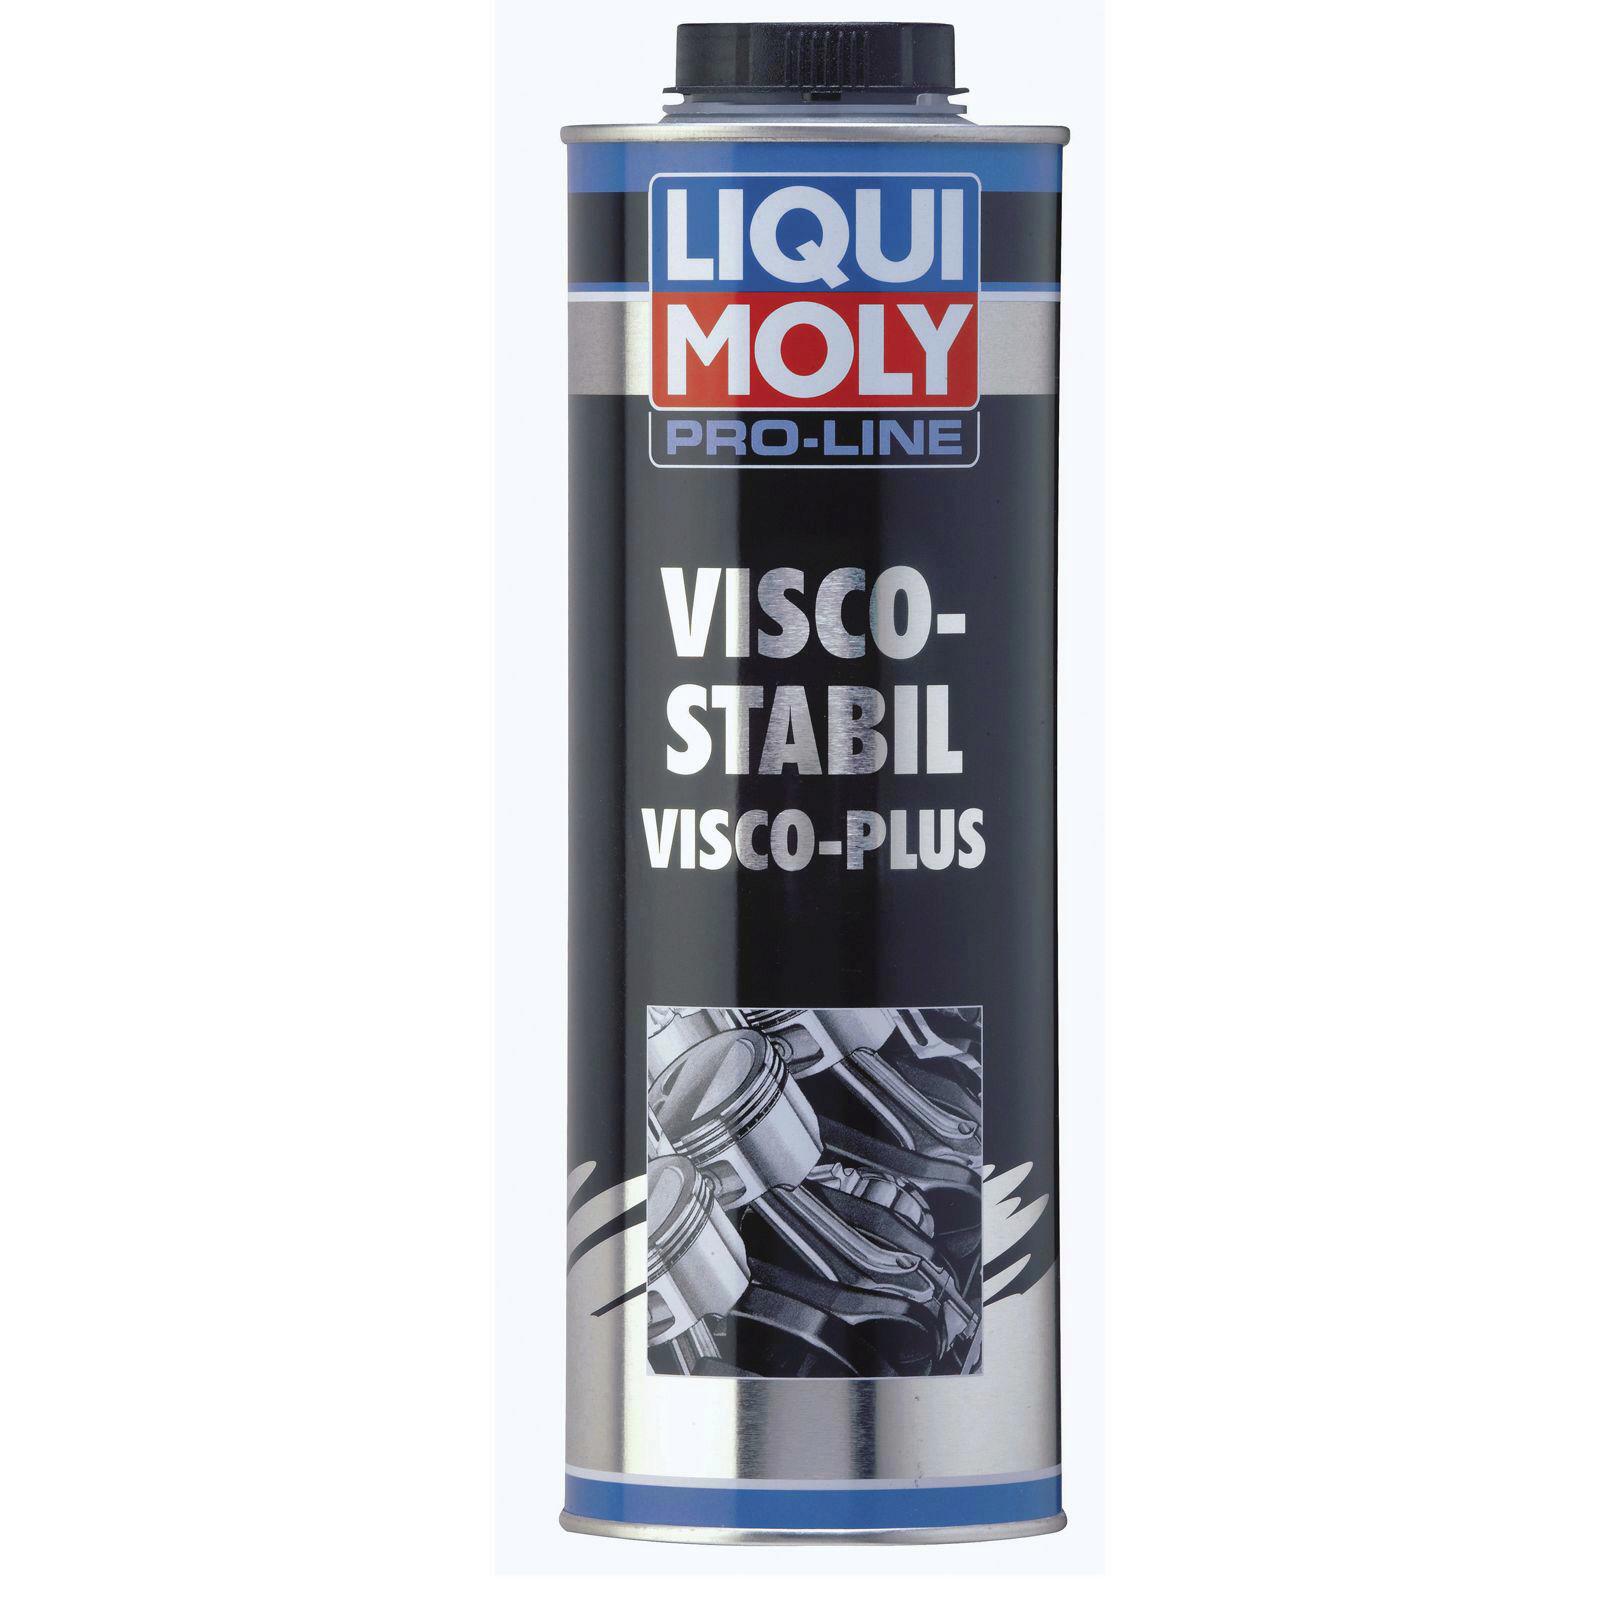 LIQUI MOLY Engine Oil Additive Pro-Line Visco-Stabil